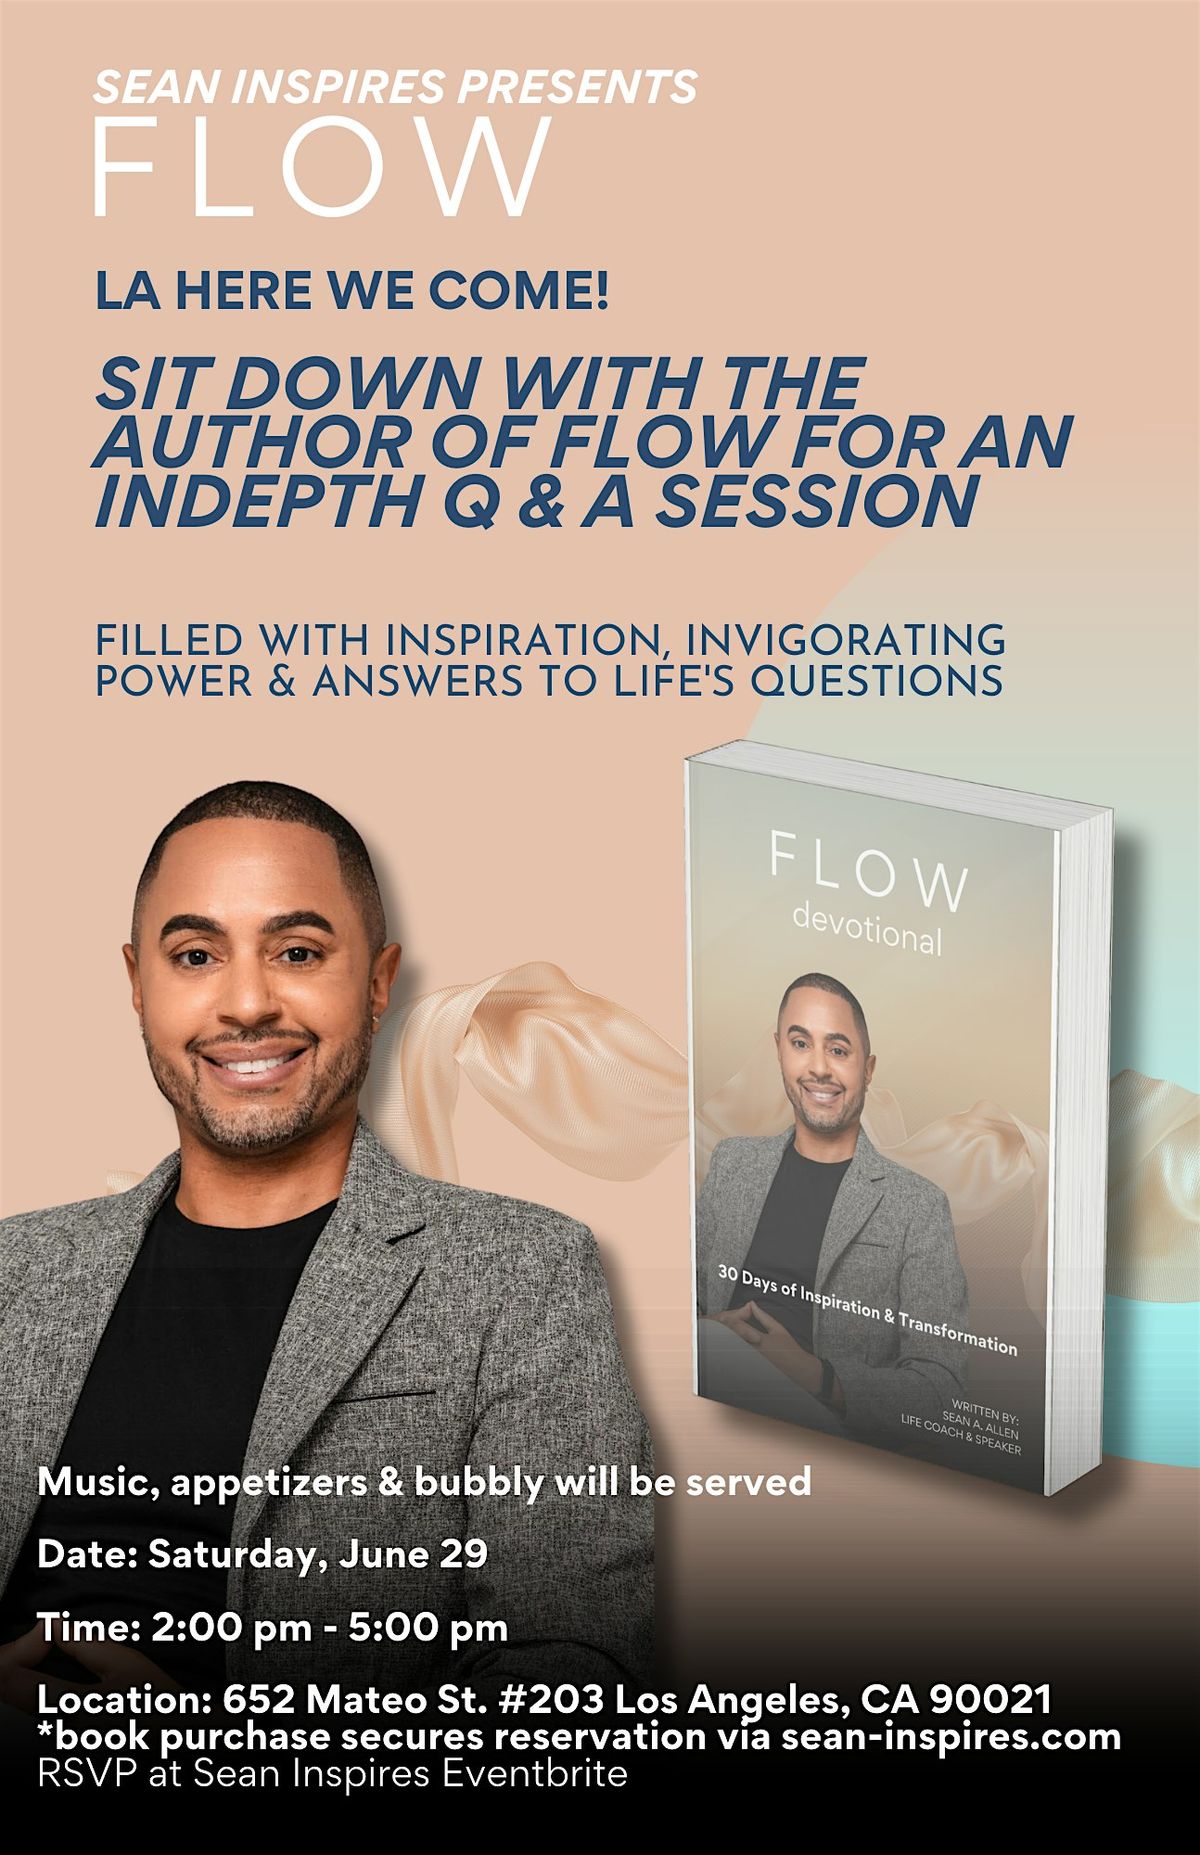 Sean Inspires Presents: FLOW devotional LA Book Signing Event